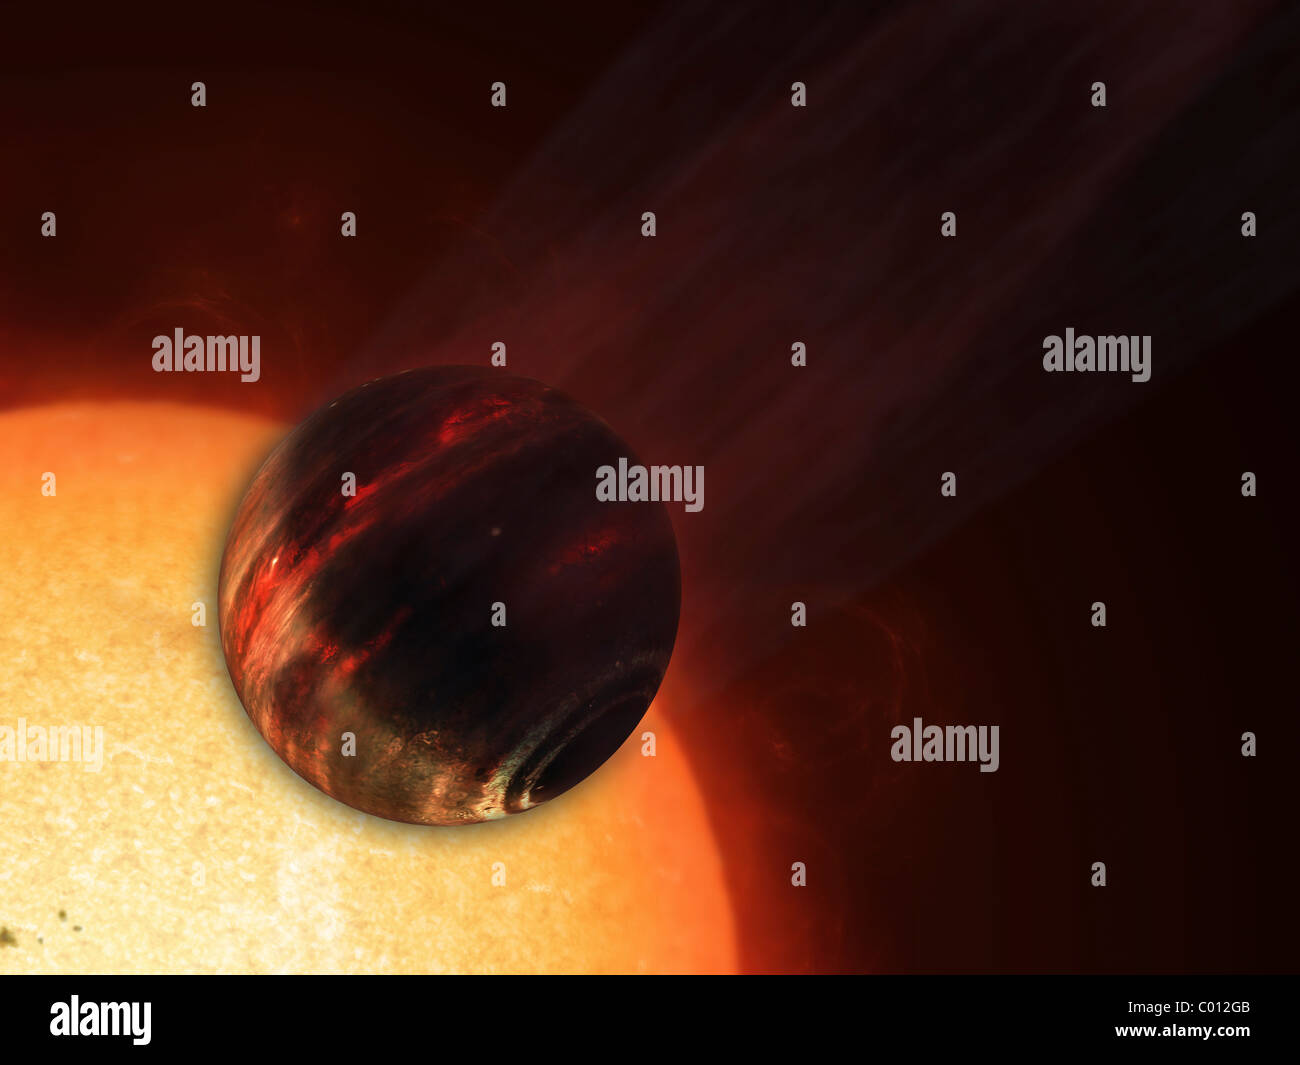 Artist's concept of a Hot Jupiter extrasolar planet orbiting a sun-like star. Stock Photo